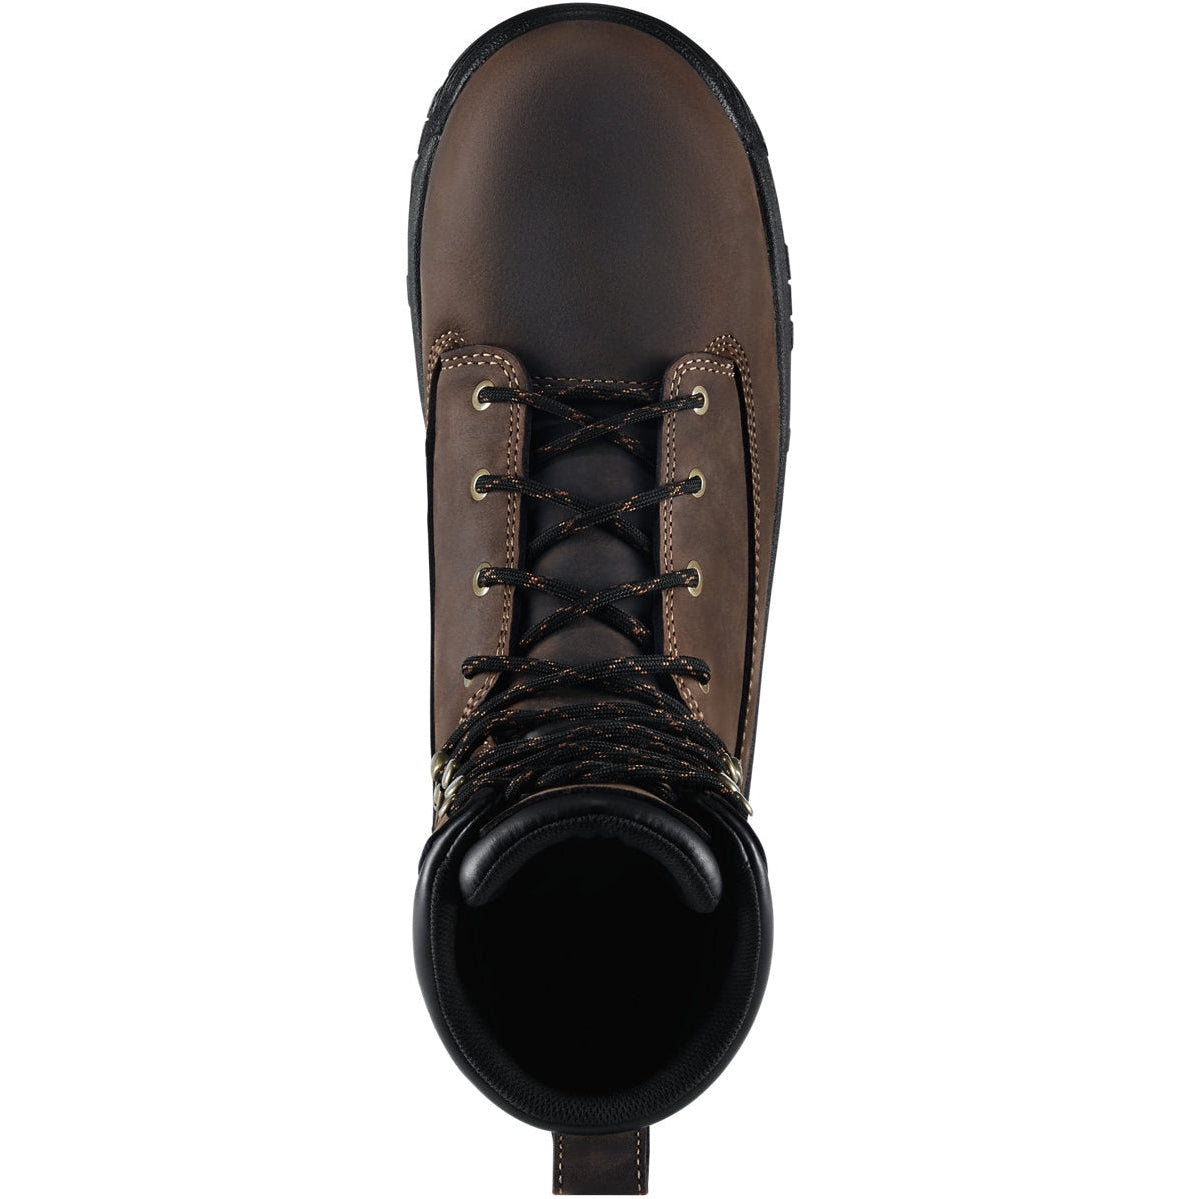 Danner Men's Riverside 8" Plain Toe WP Lace Up Work Boot - Brown - 19457  - Overlook Boots